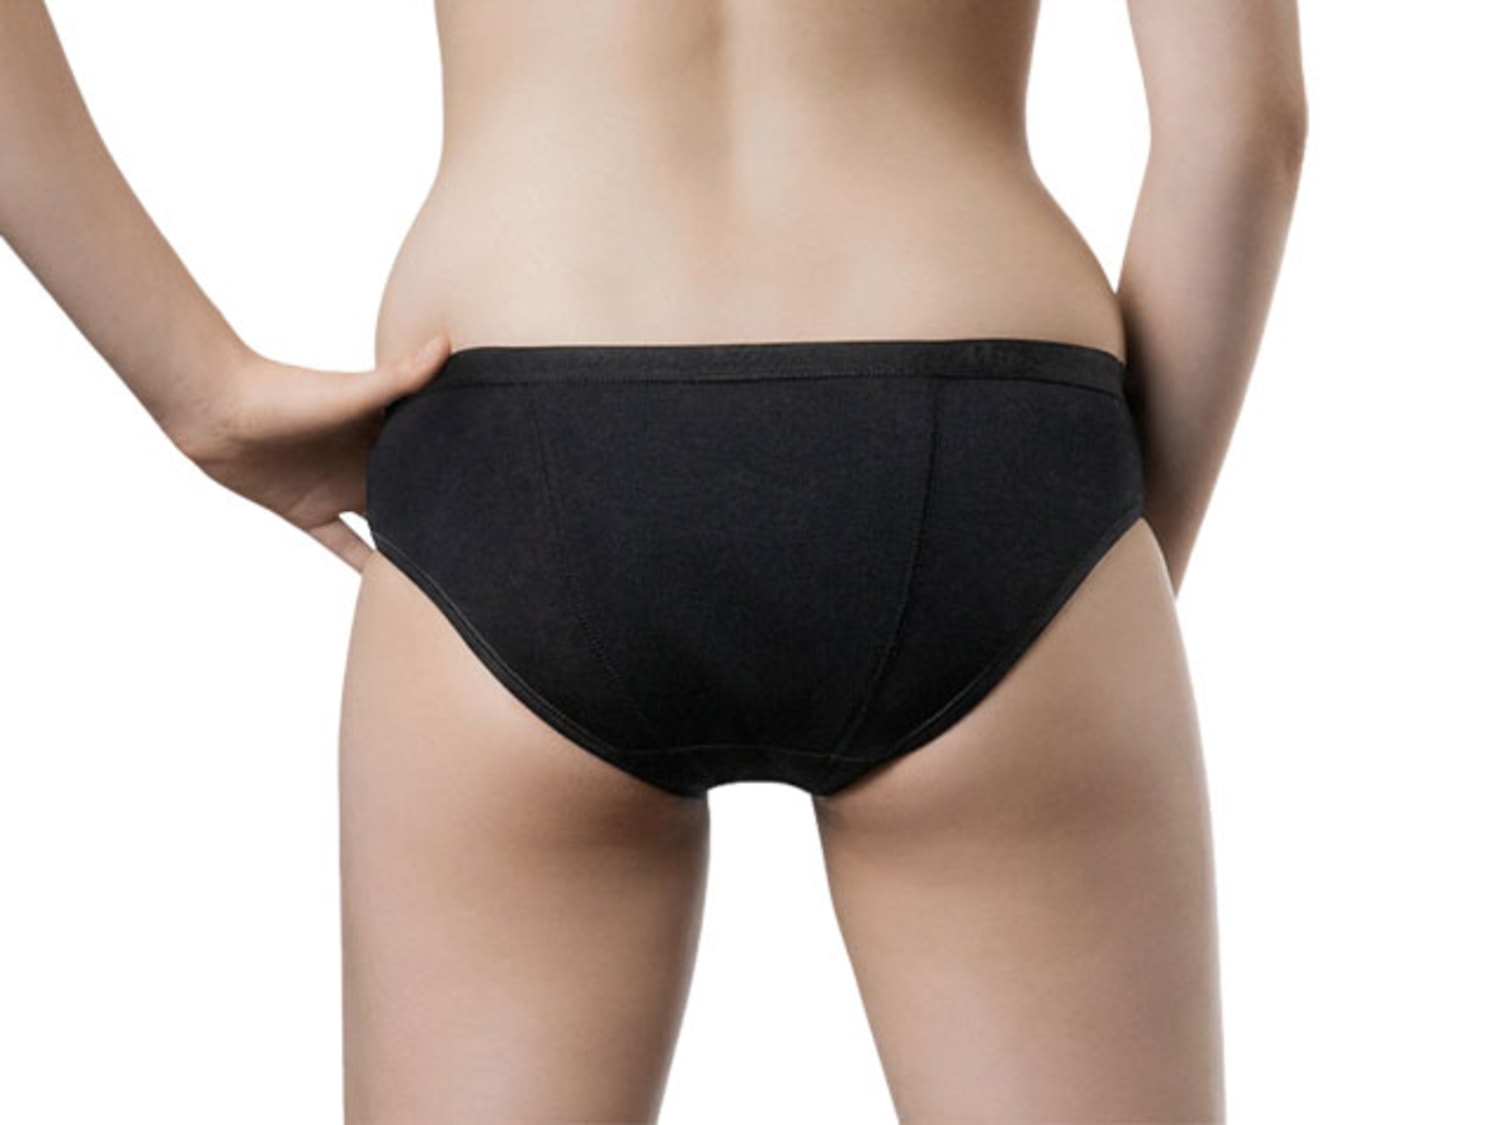 Smartypants: the fart-filtering future of underwear, Design